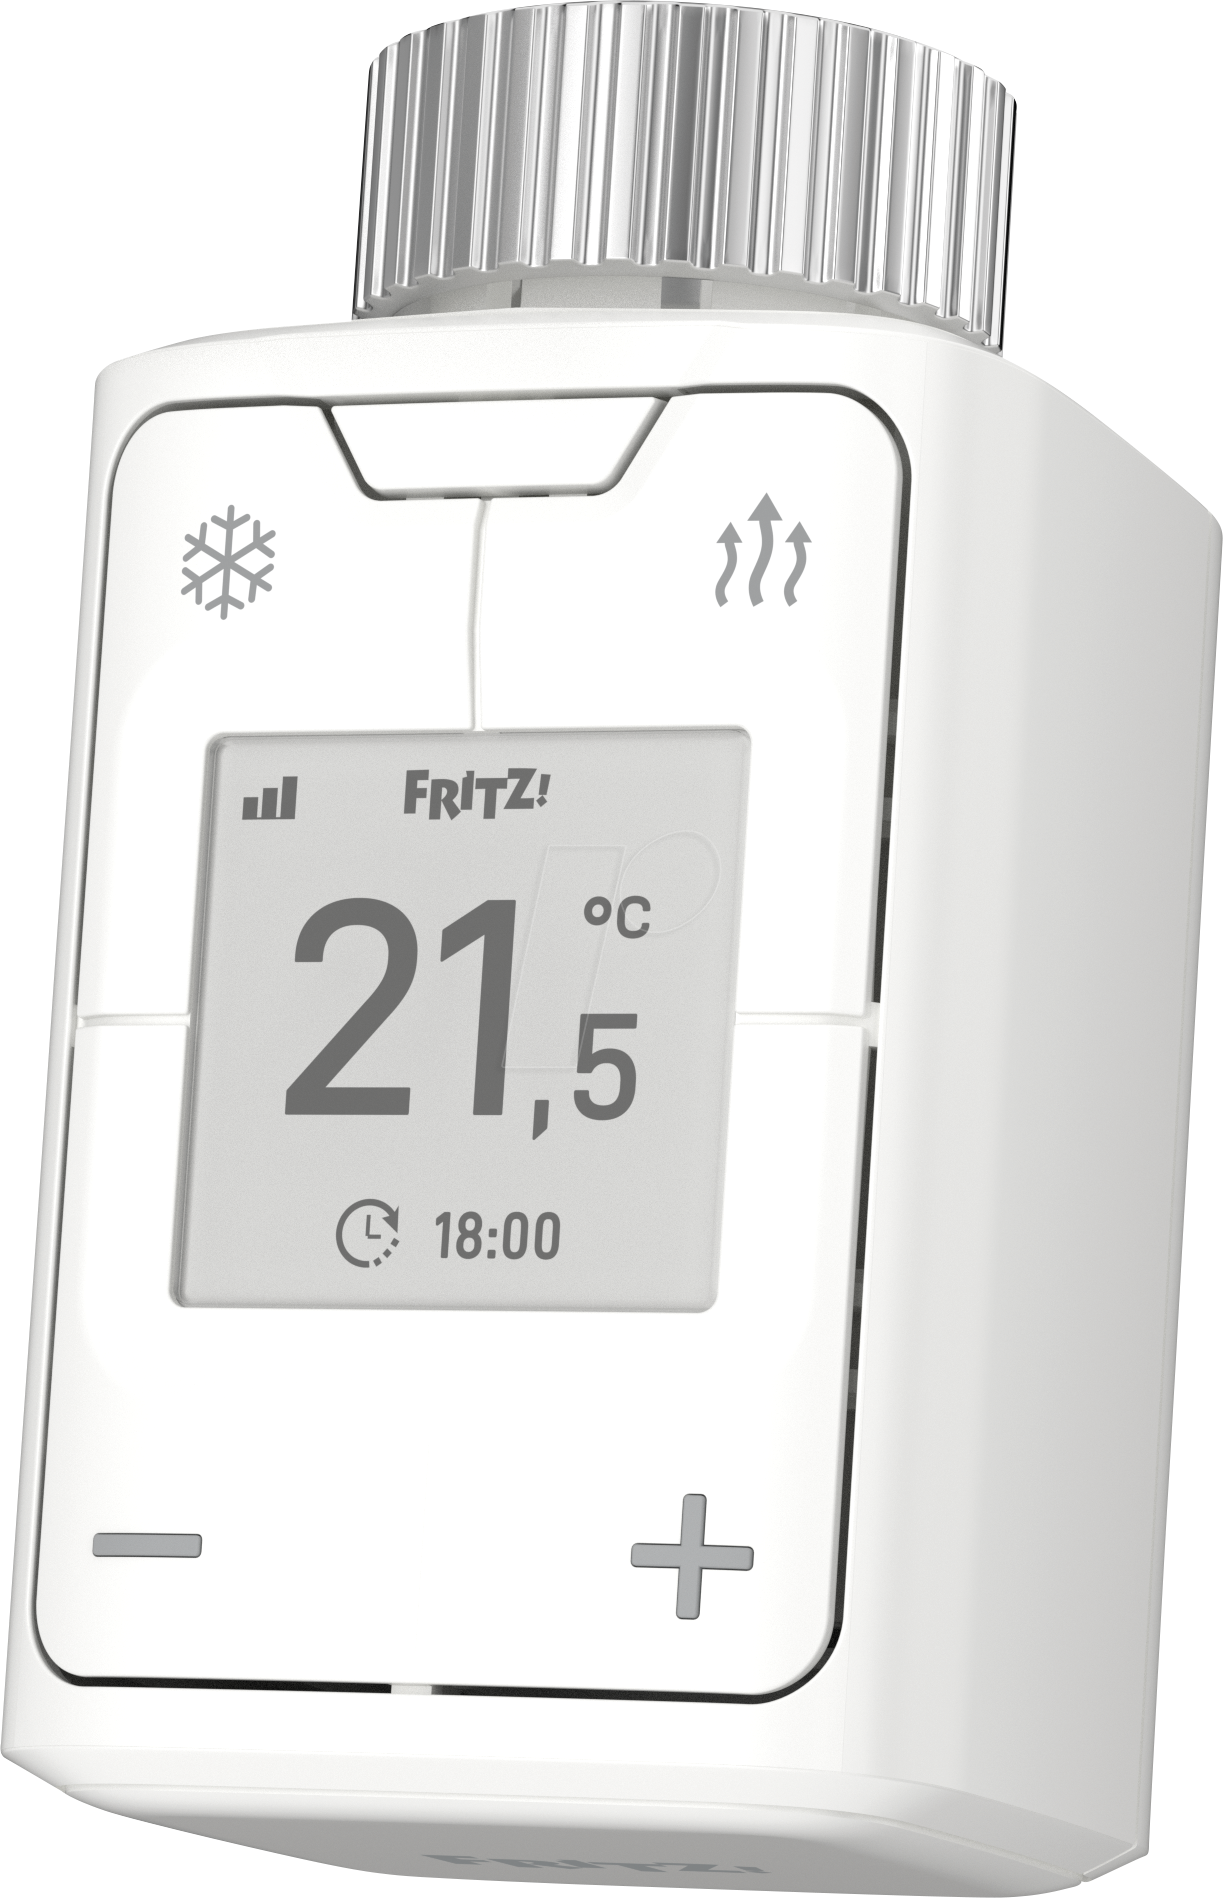 AVM DECT 302: FRITZ!DECT 302 – smart radiator controller at